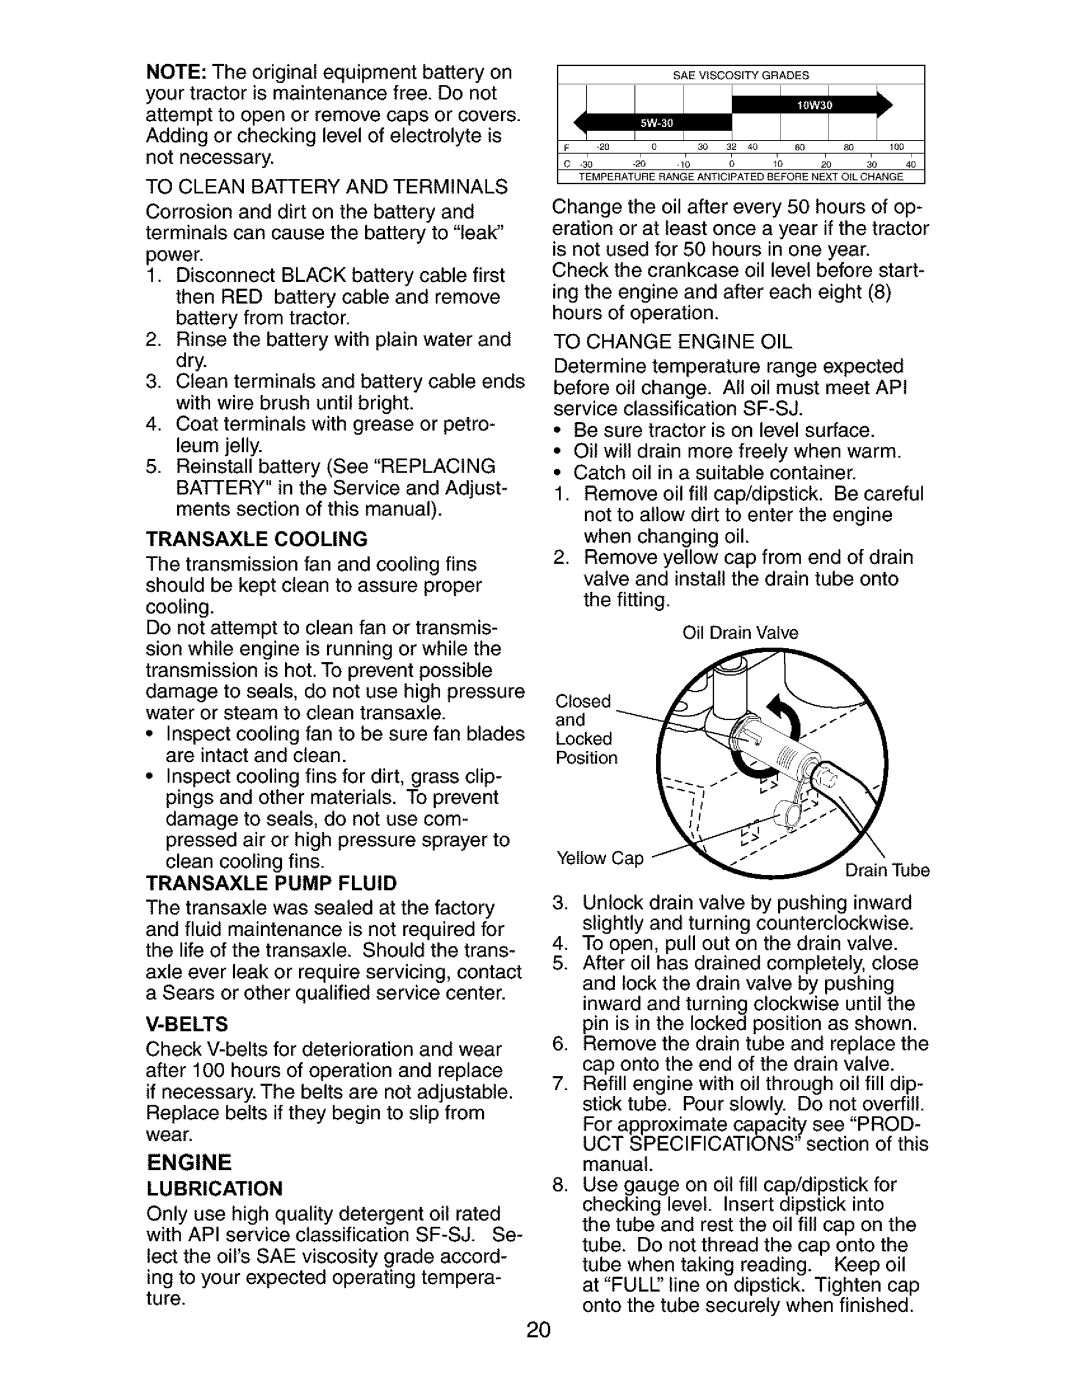 Craftsman 917.27316 owner manual To Cleanbatteryandterminals 